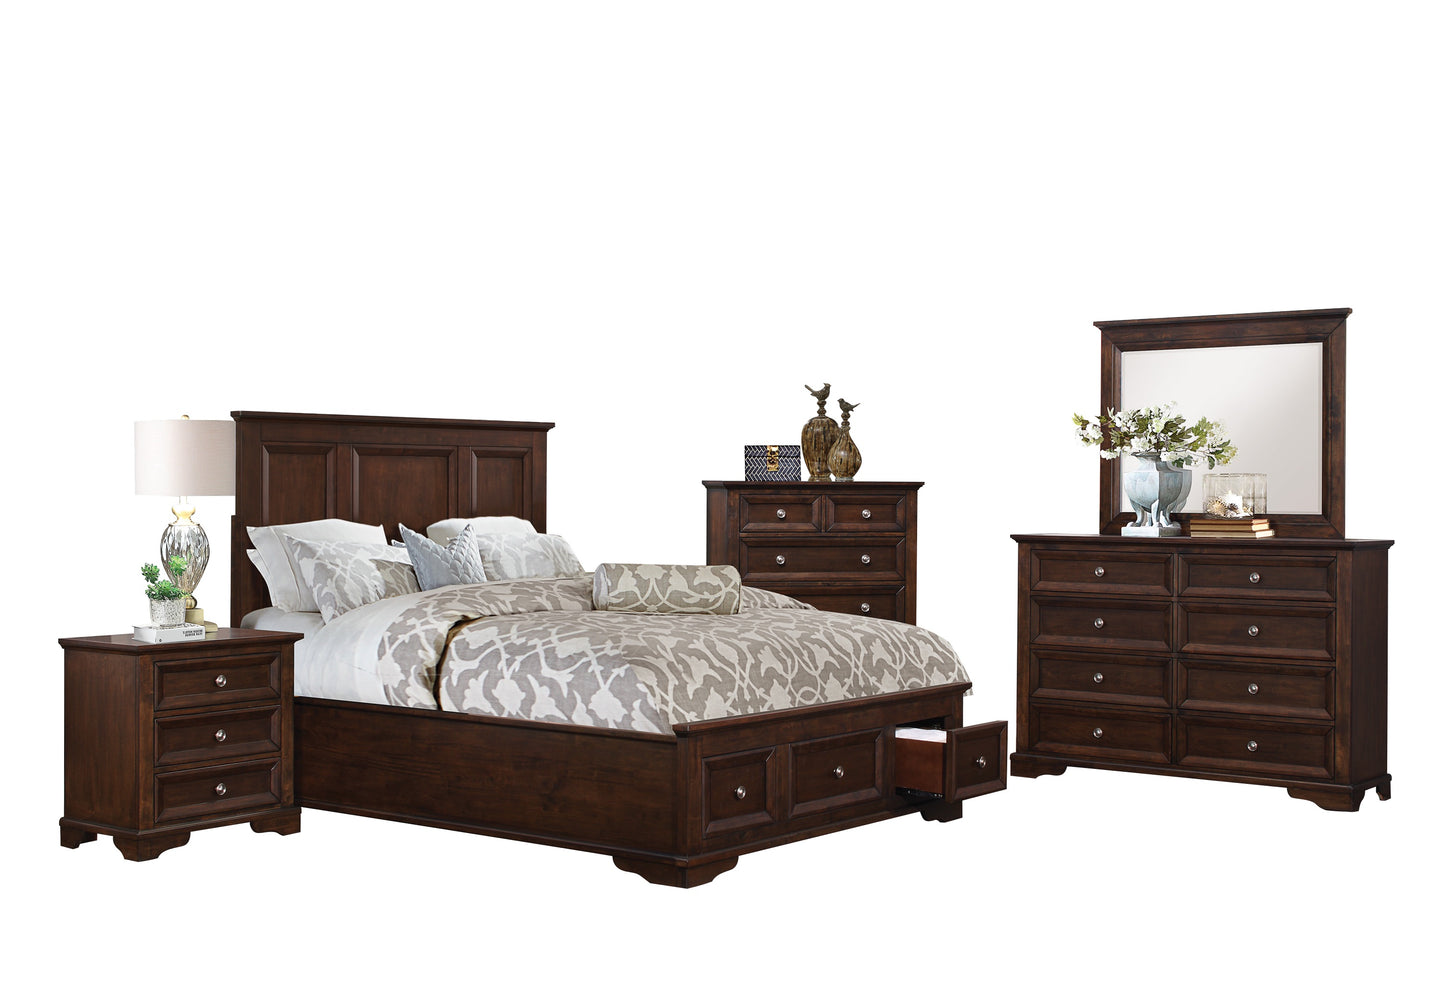 Elista Rustic Country 5PC Bedroom Set E King Storage Platform Bed, Dresser, Mirror, Nightstand, Chest in Espresso